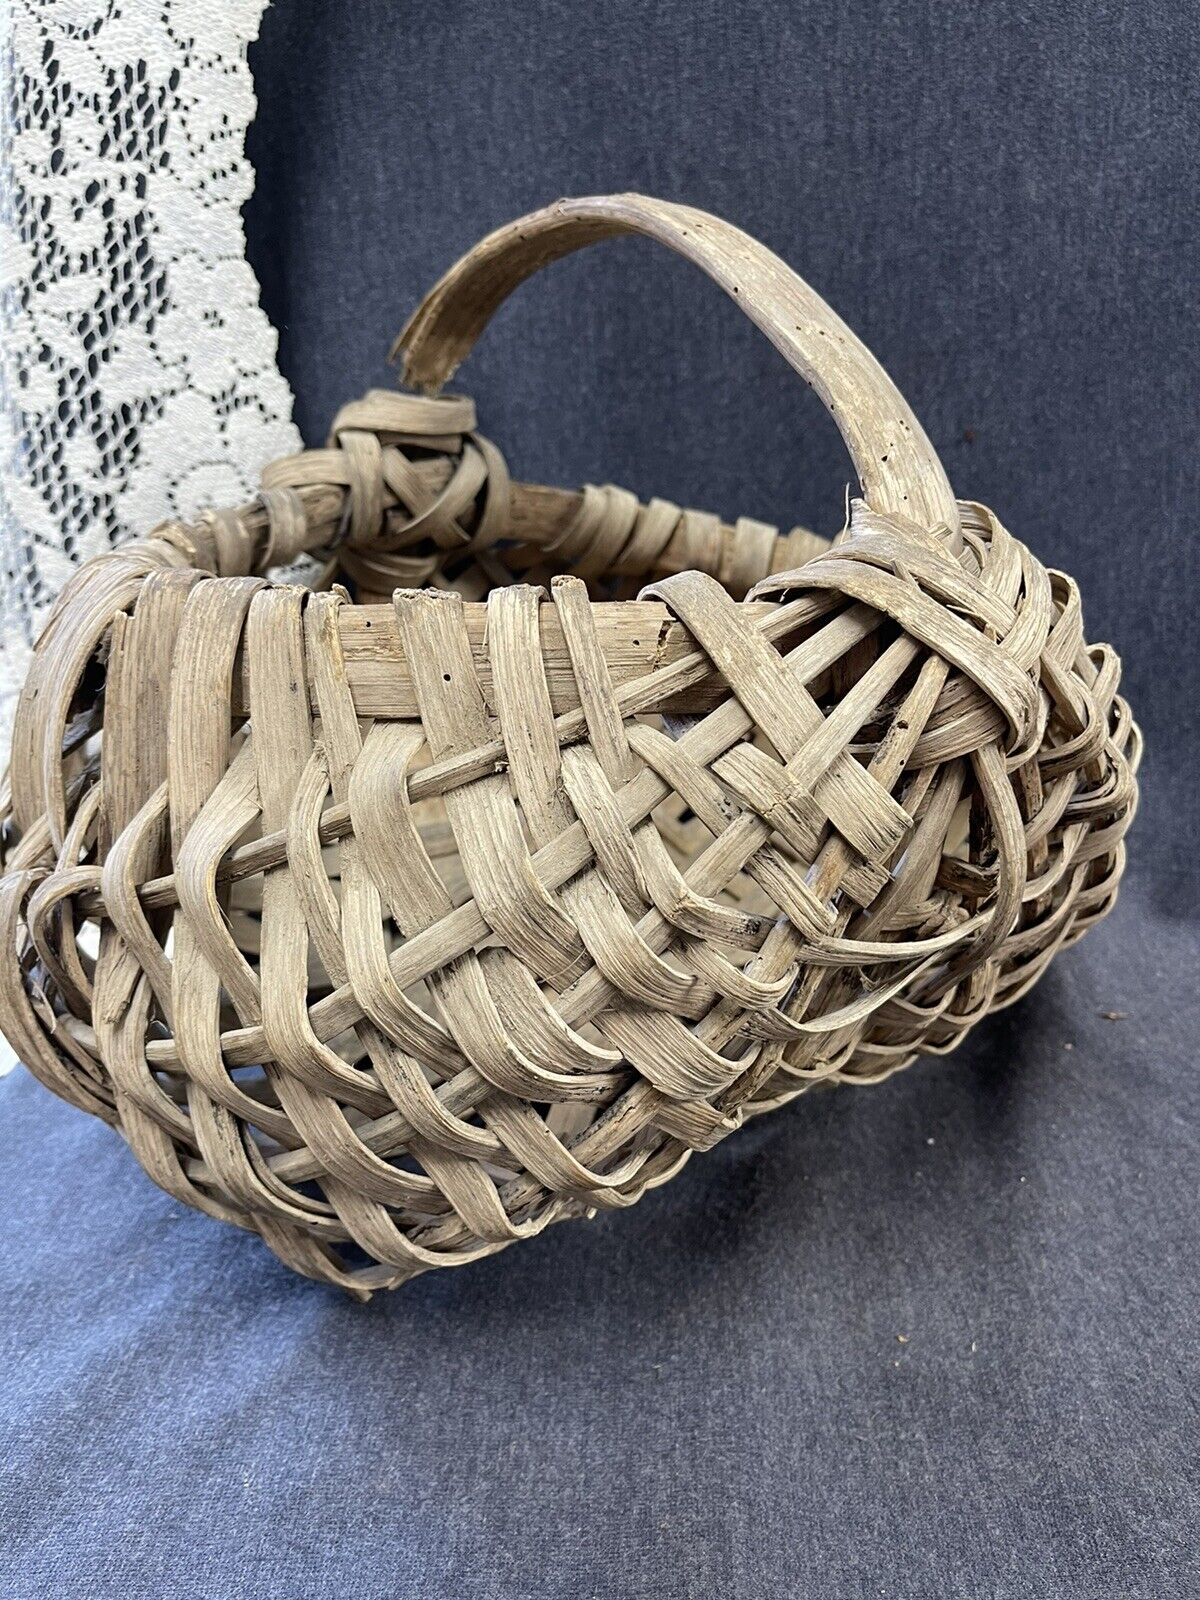 Antique Primitive Handmade Cabin Wood Splint Gathering Buttocks Basket 15x13x12”